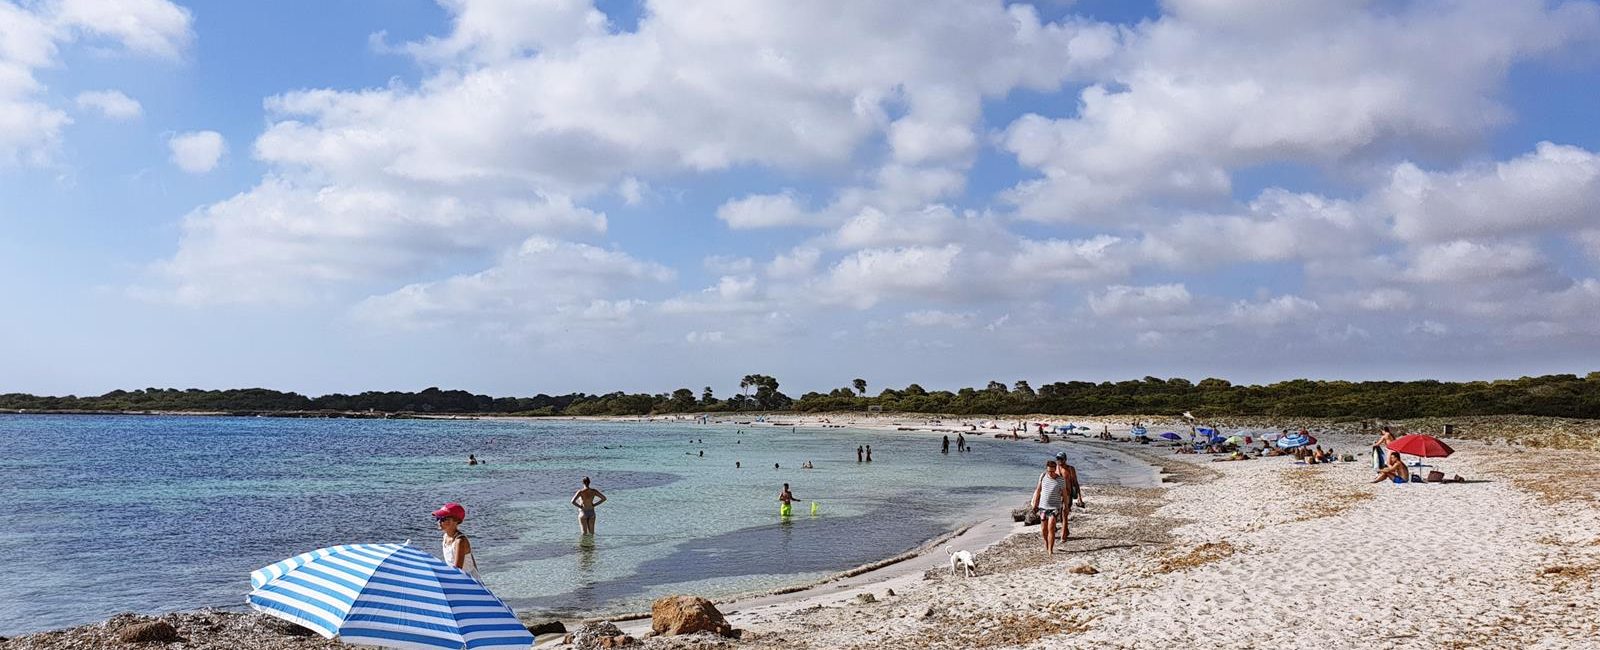 Playa Es Caragol – wild beaches in Majorca.